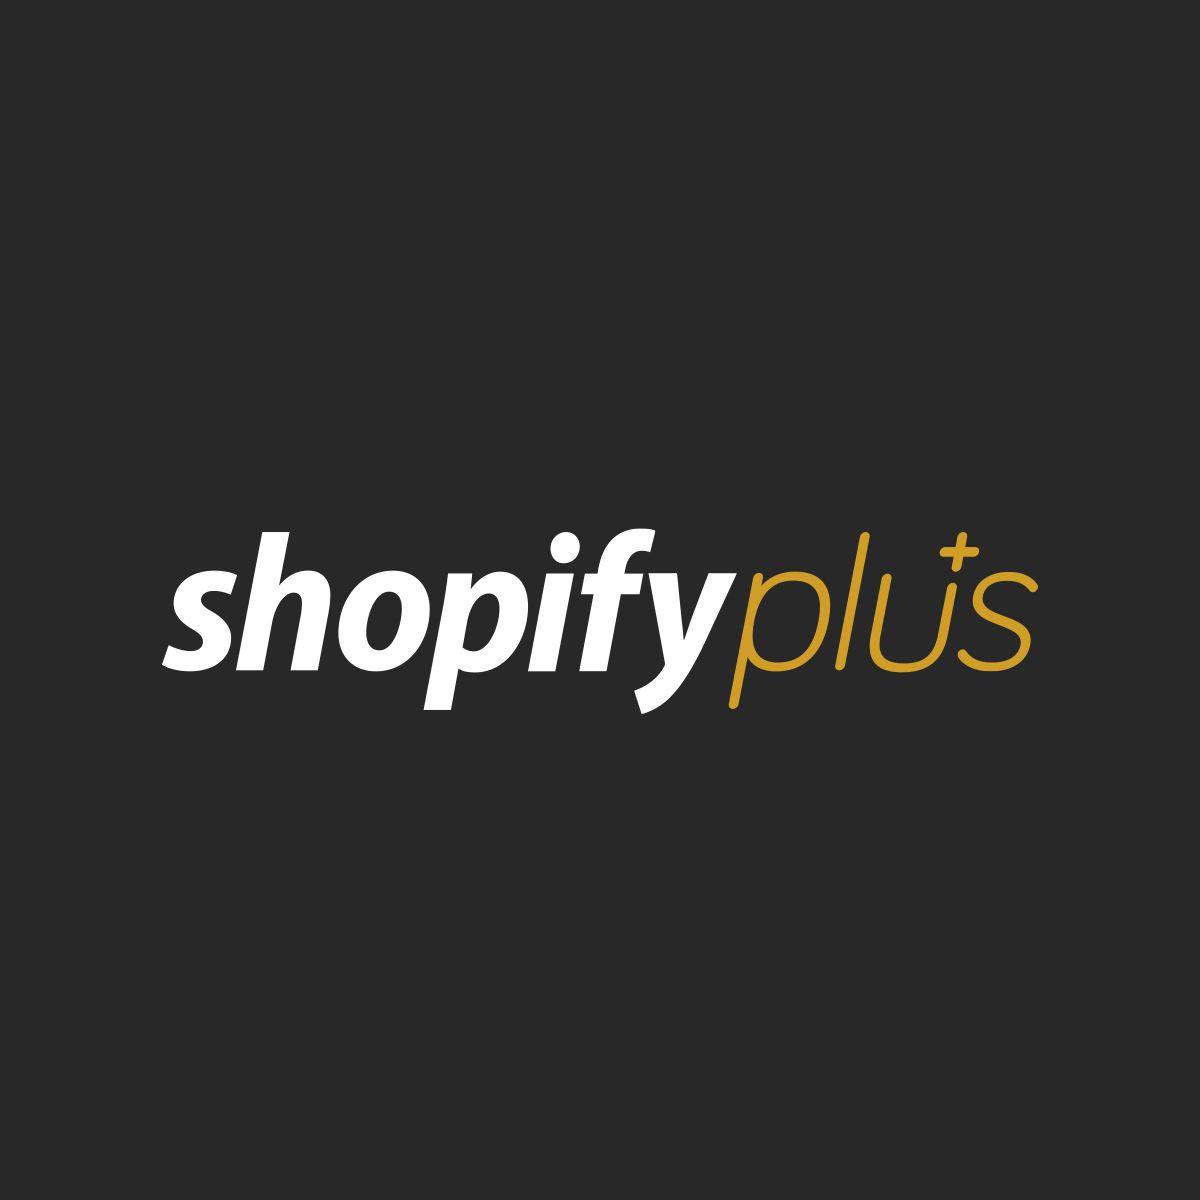 Plus Logo - The Shopify Plus brand